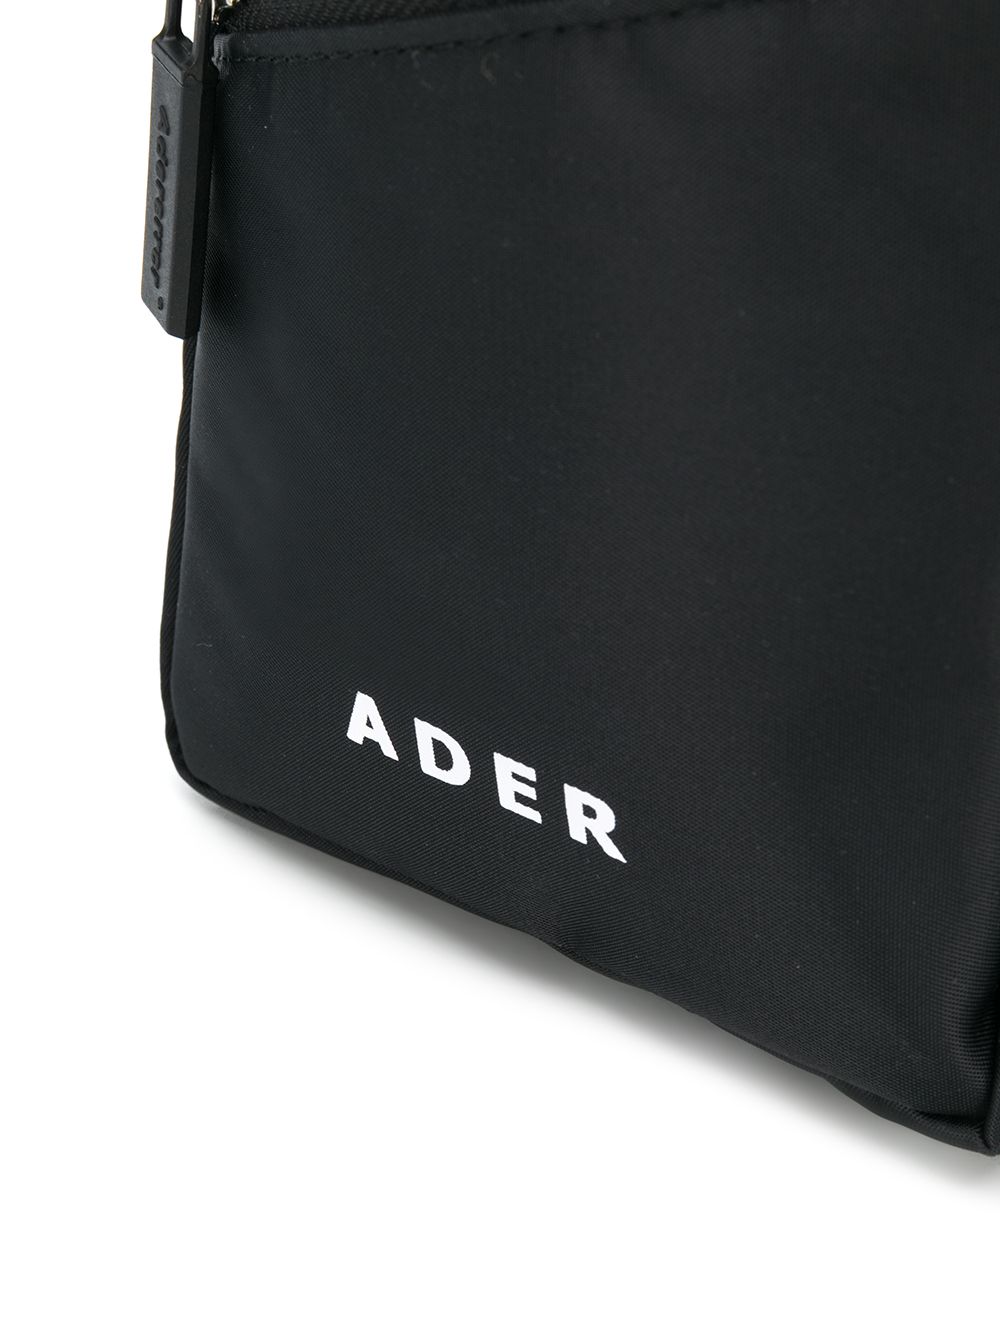 фото Ader error сумка-мессенджер с логотипом